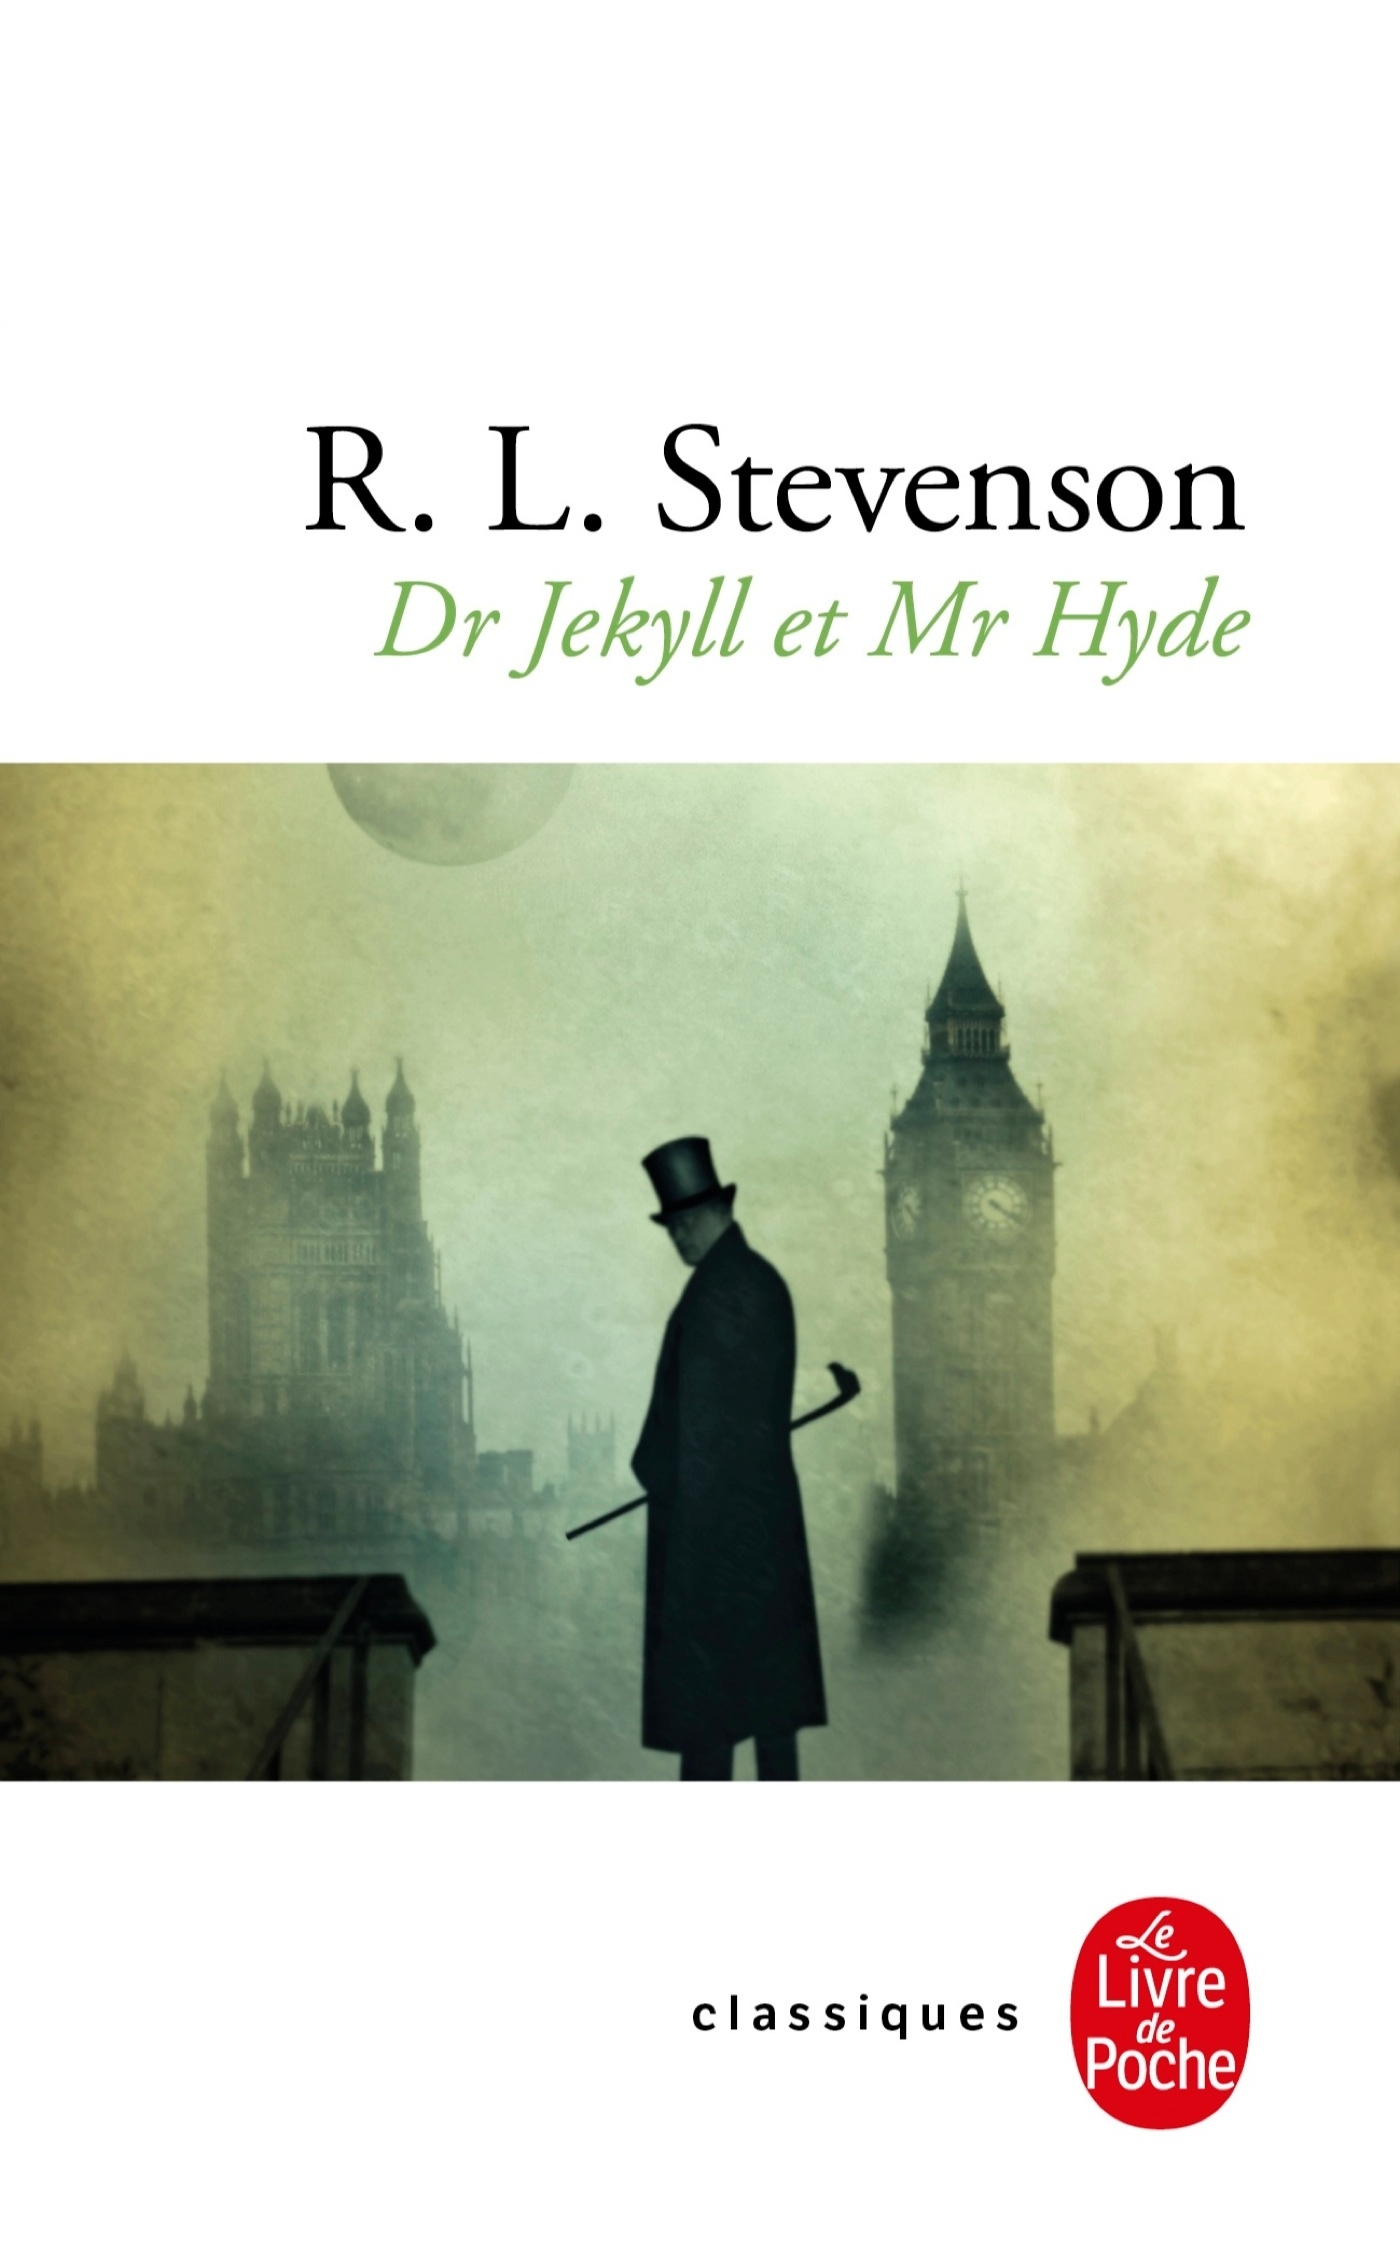 Dr Jekyll Et Mr Hyde Film 2018 critique de "Dr Jekyll et Mr Hyde", dernier livre de R. L. Stevenson